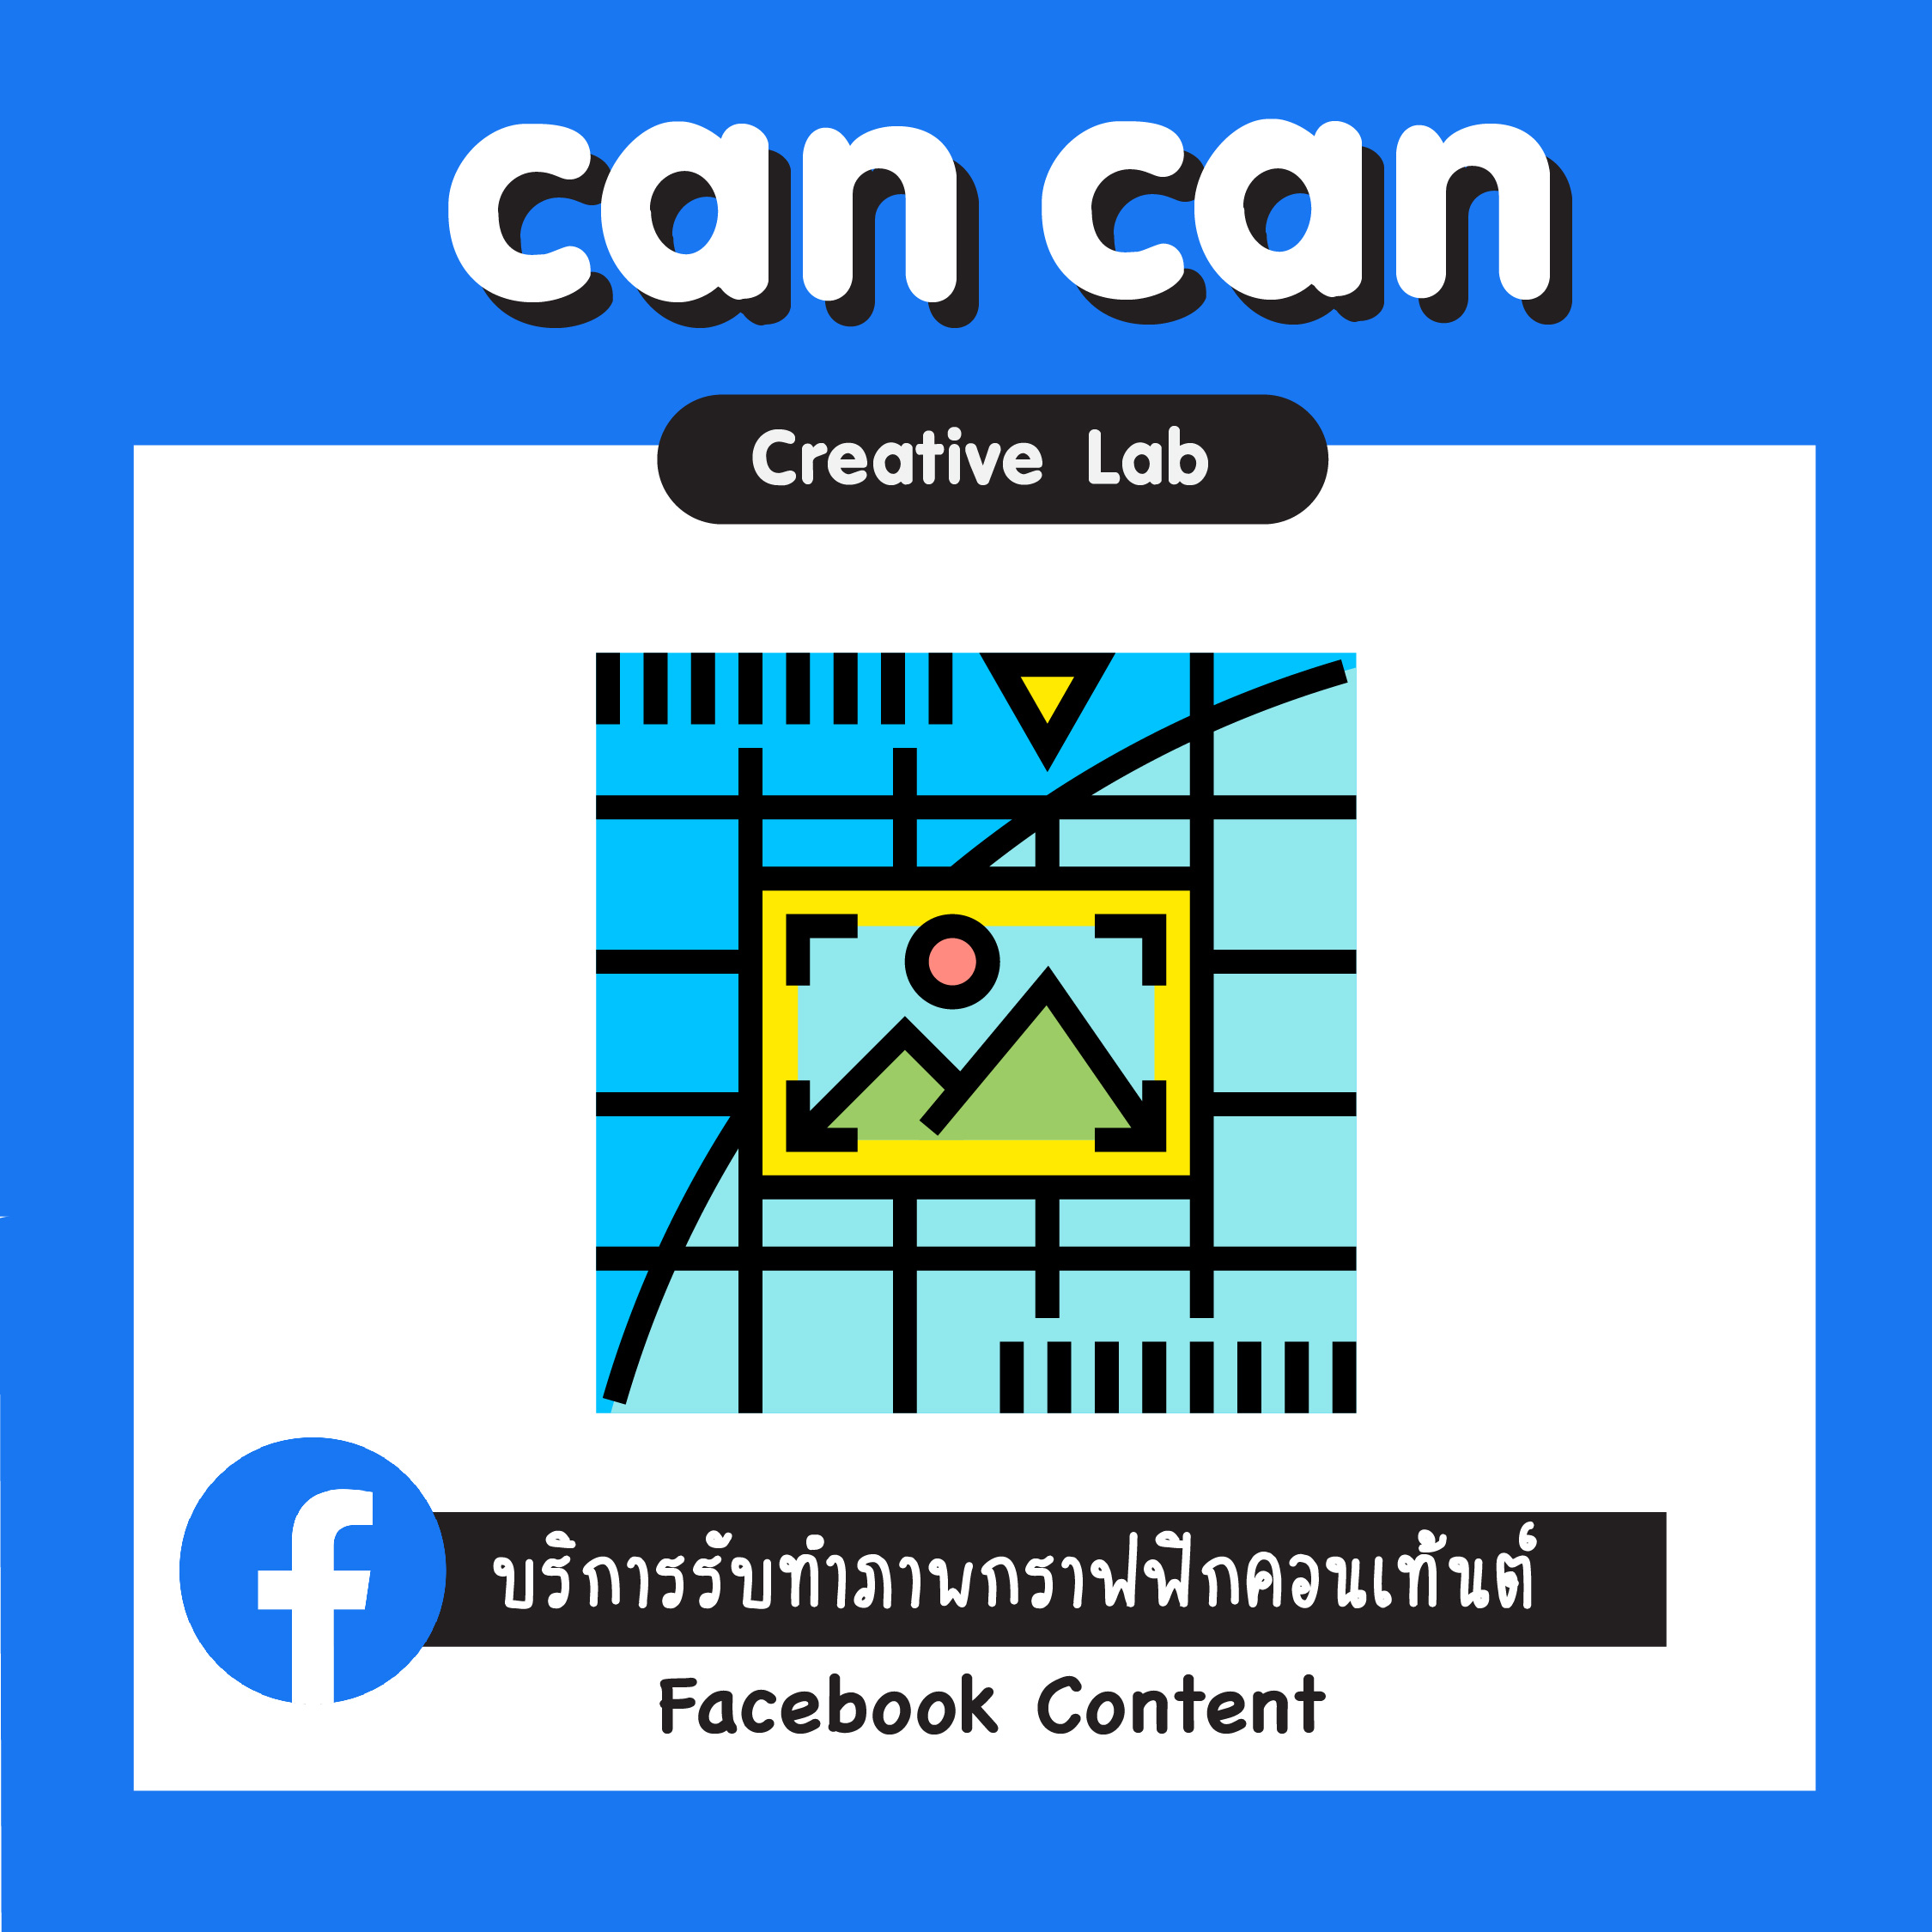 CanCan Creative Lab : บริการทำภาพคอนเทนต์ Facebook Content แพ็กเกจรายเดือน 10 post ต่อเดือน  ราคาพิเศษ  (จัดส่งทางอีเมล)  )